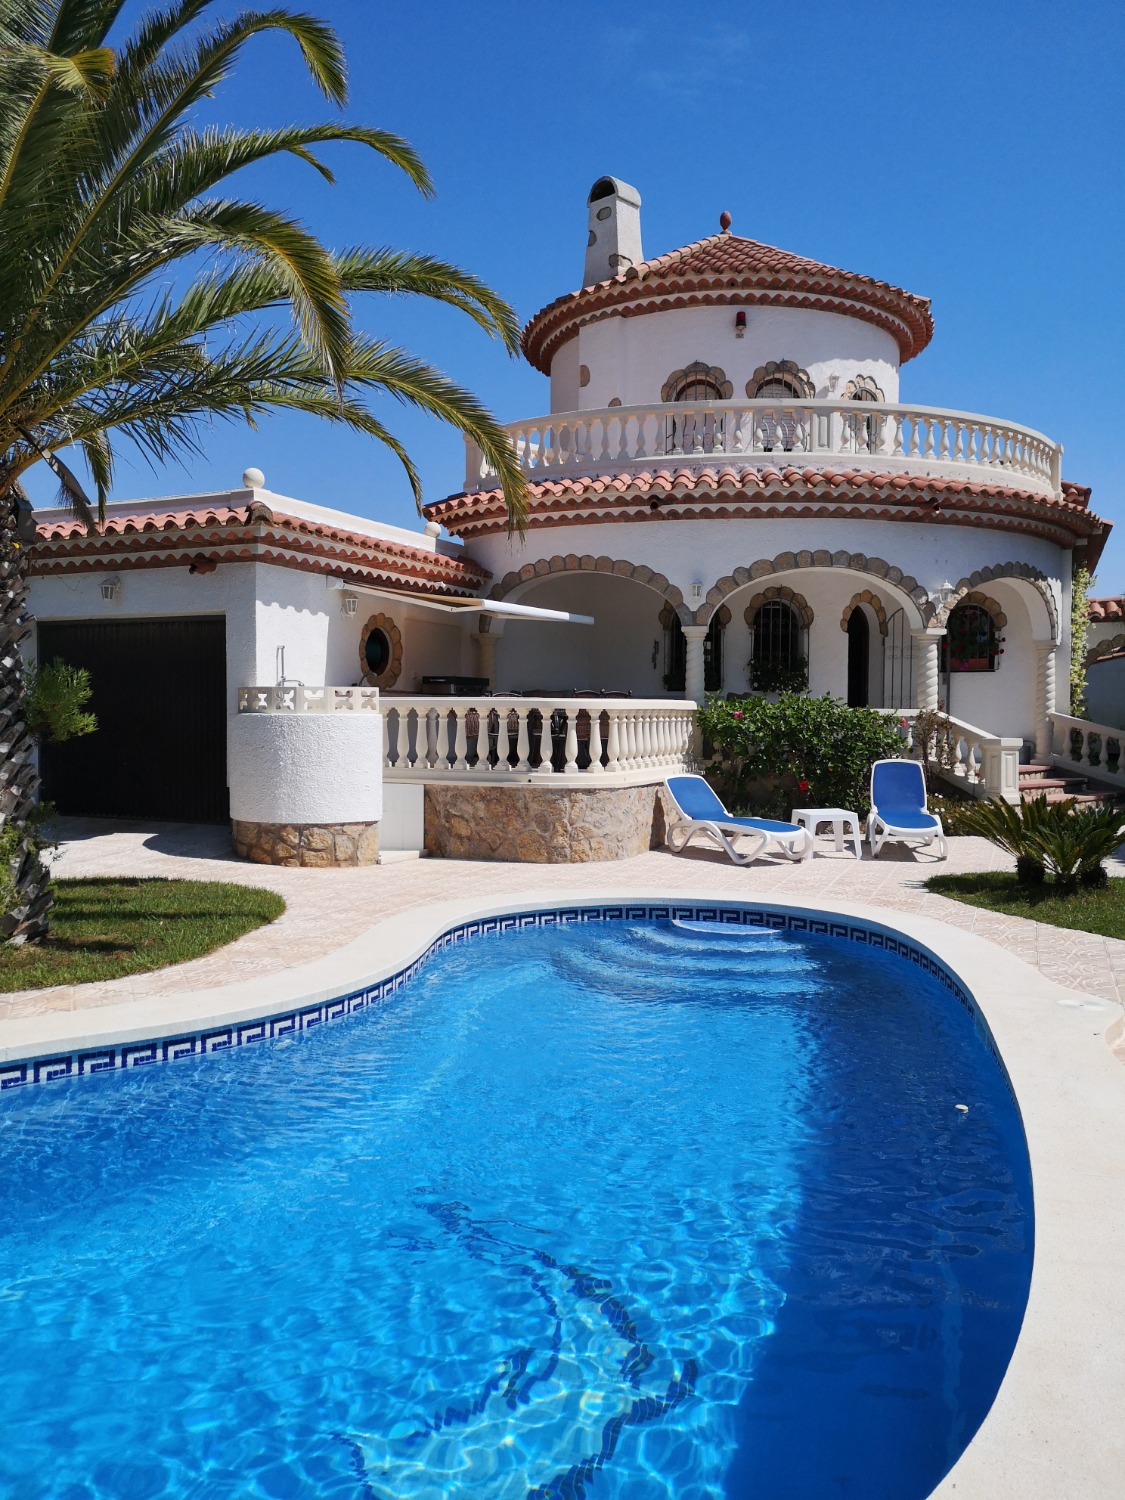 Encantadora villa con piscina privada ubicada en Miami Platja